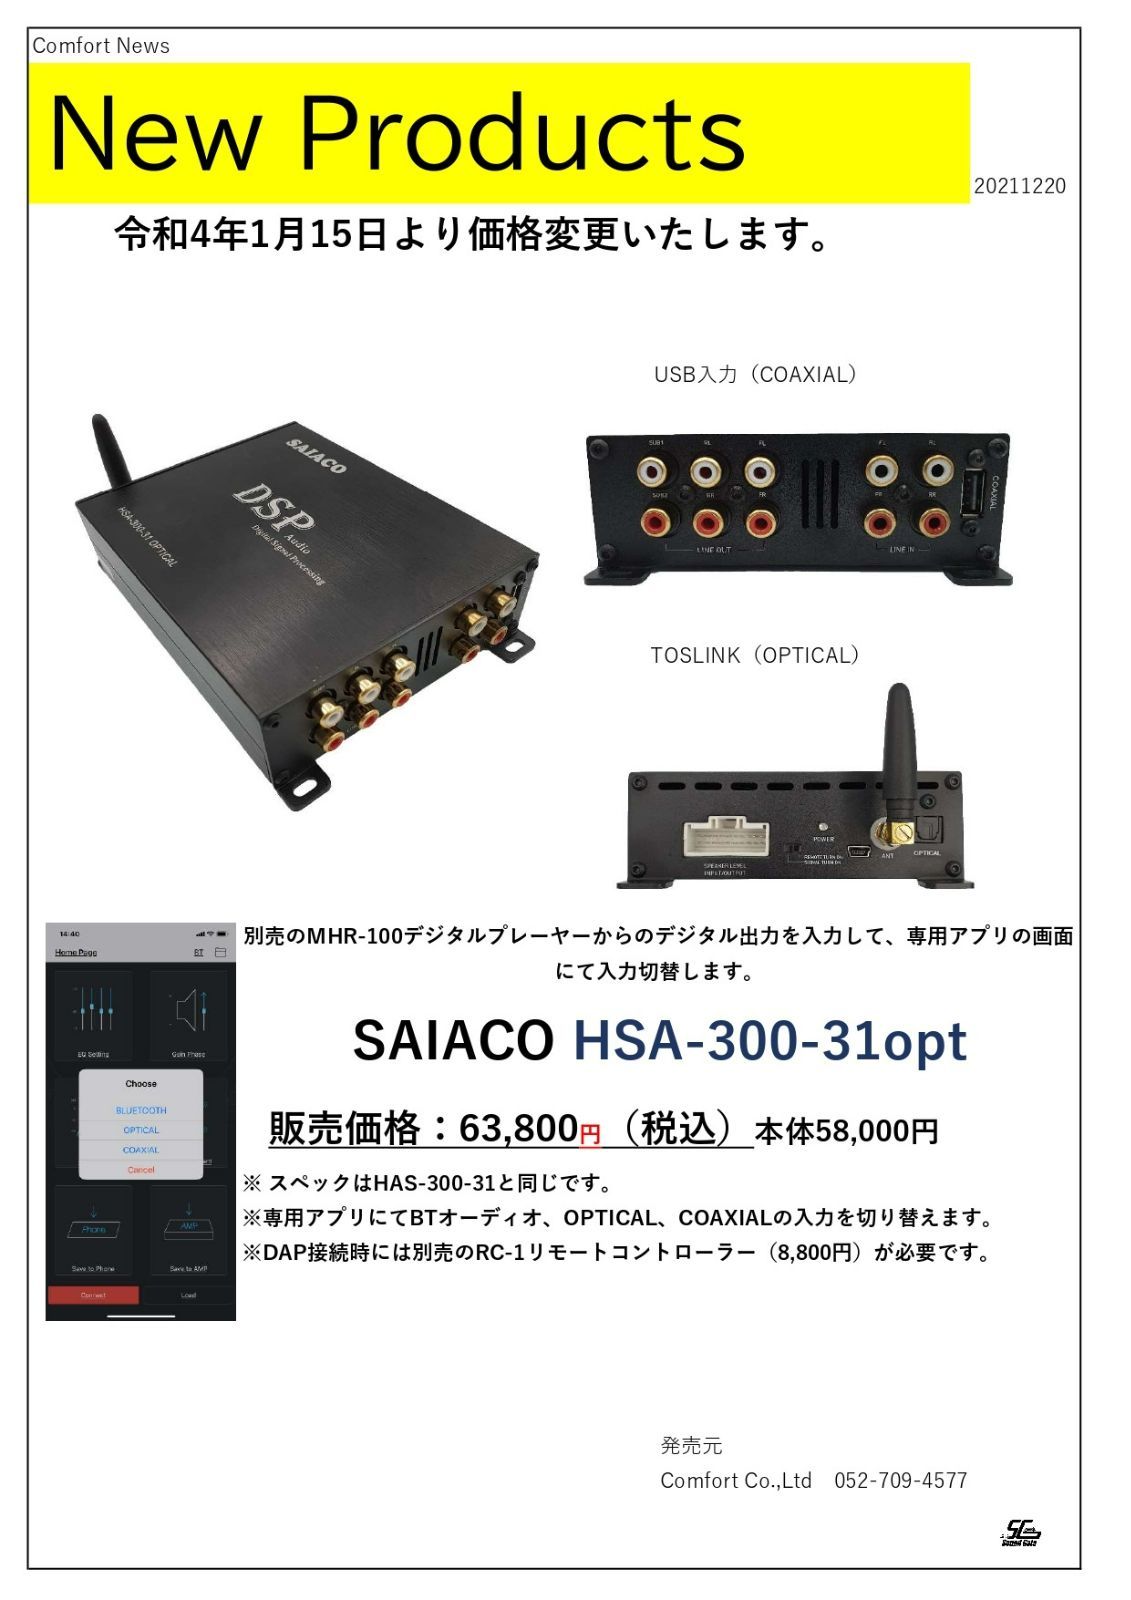 SAIACO HSA-300-31opt 現行品＋リモコンRC-1